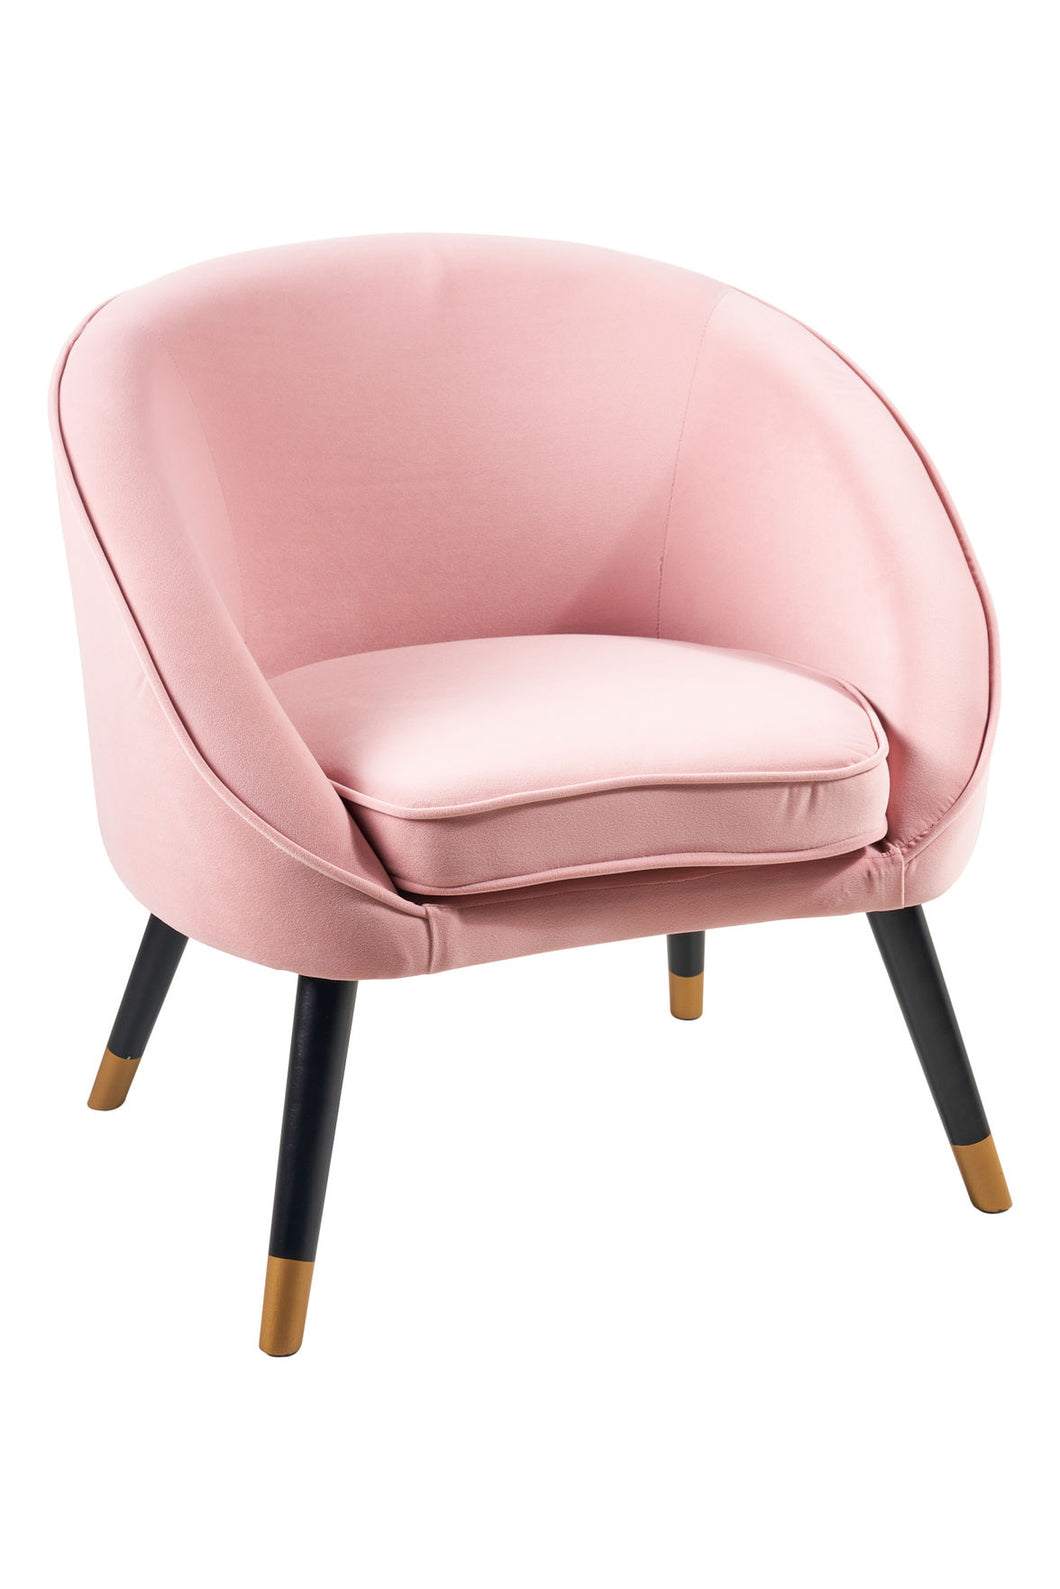 Orlando Store™ - Isadora - Pink Armchair